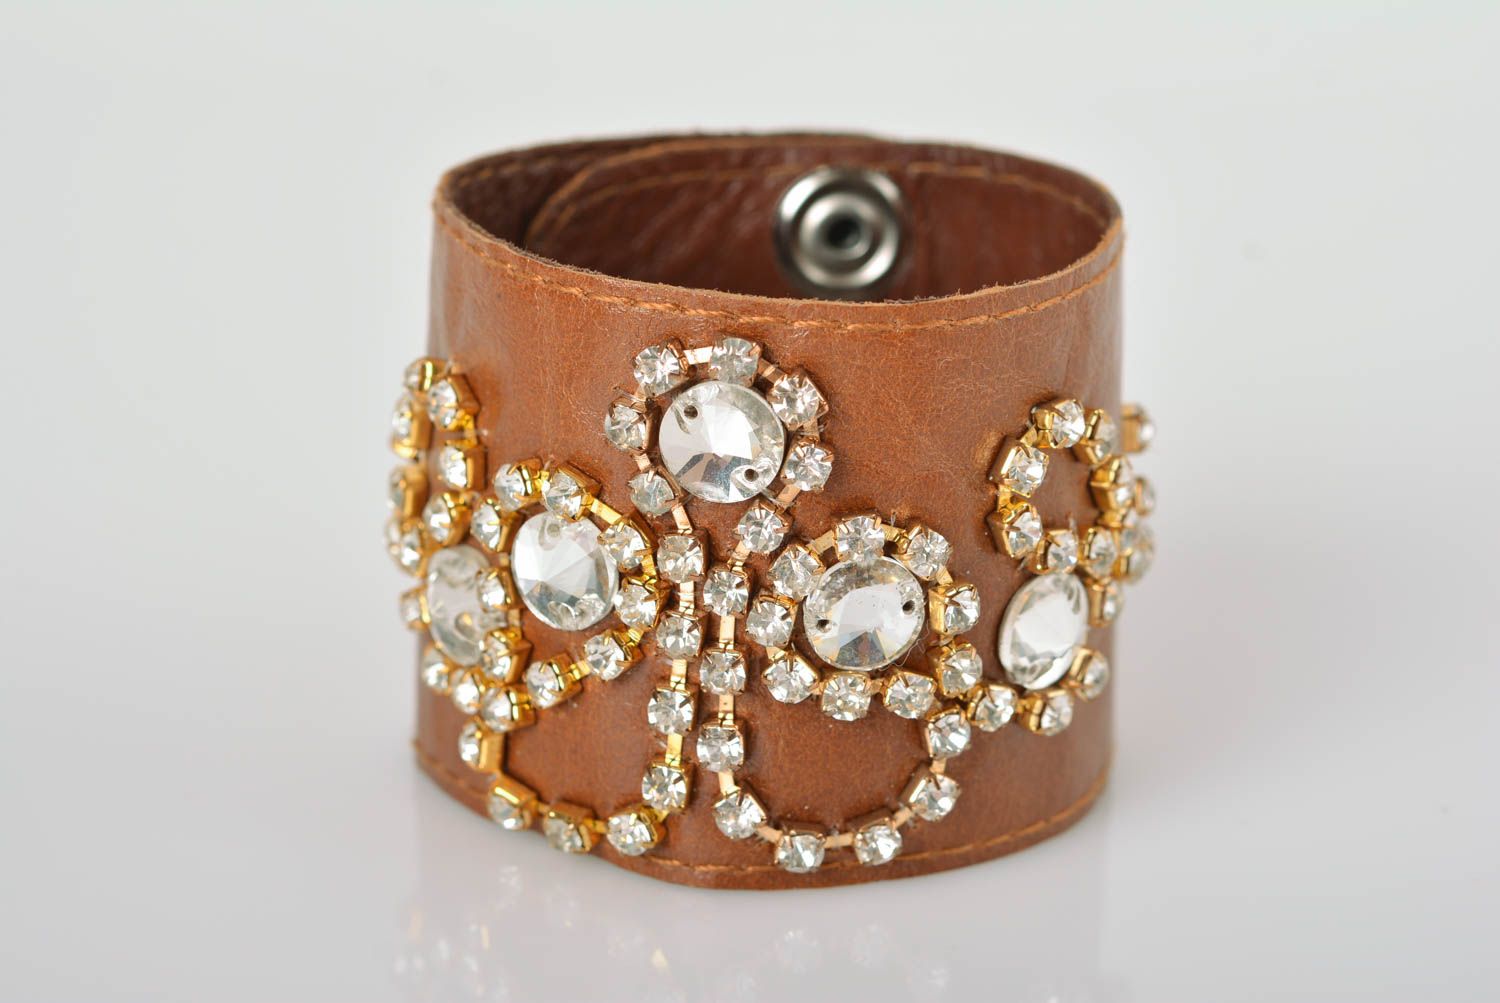 Beautiful handmade leather bracelet wrist bracelet designs artisan jewelry photo 4